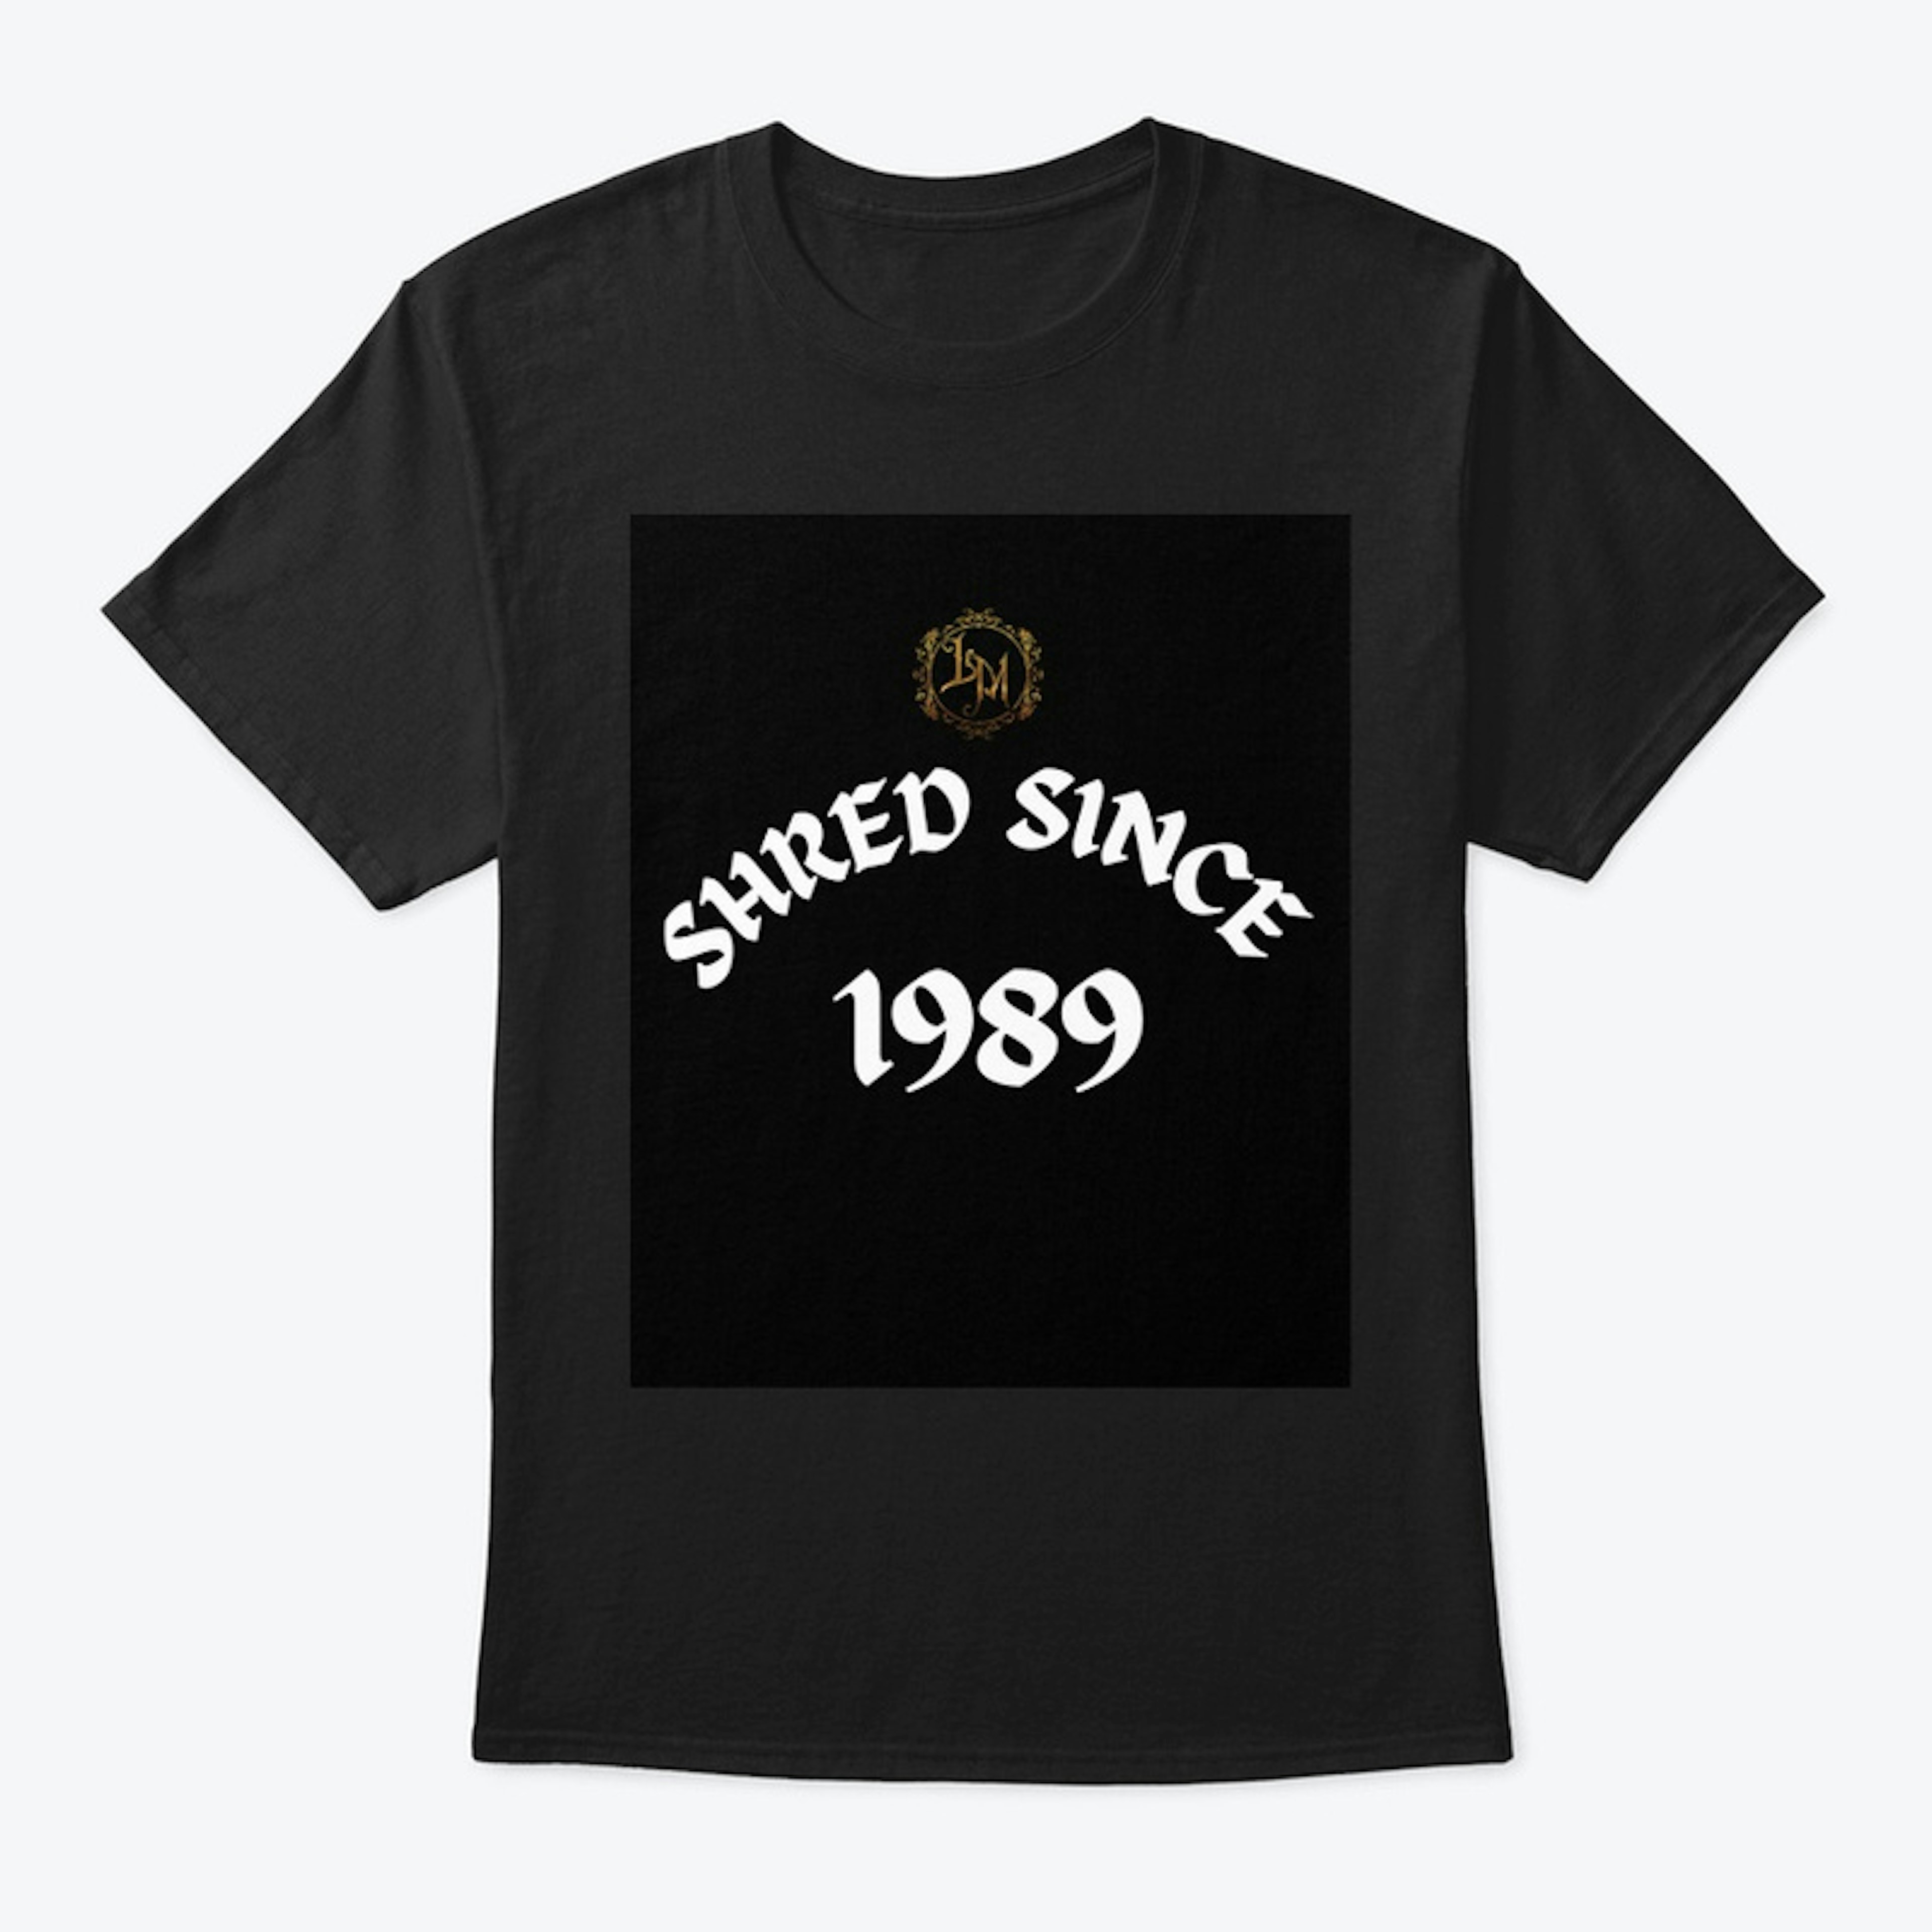 Shred since 1989 